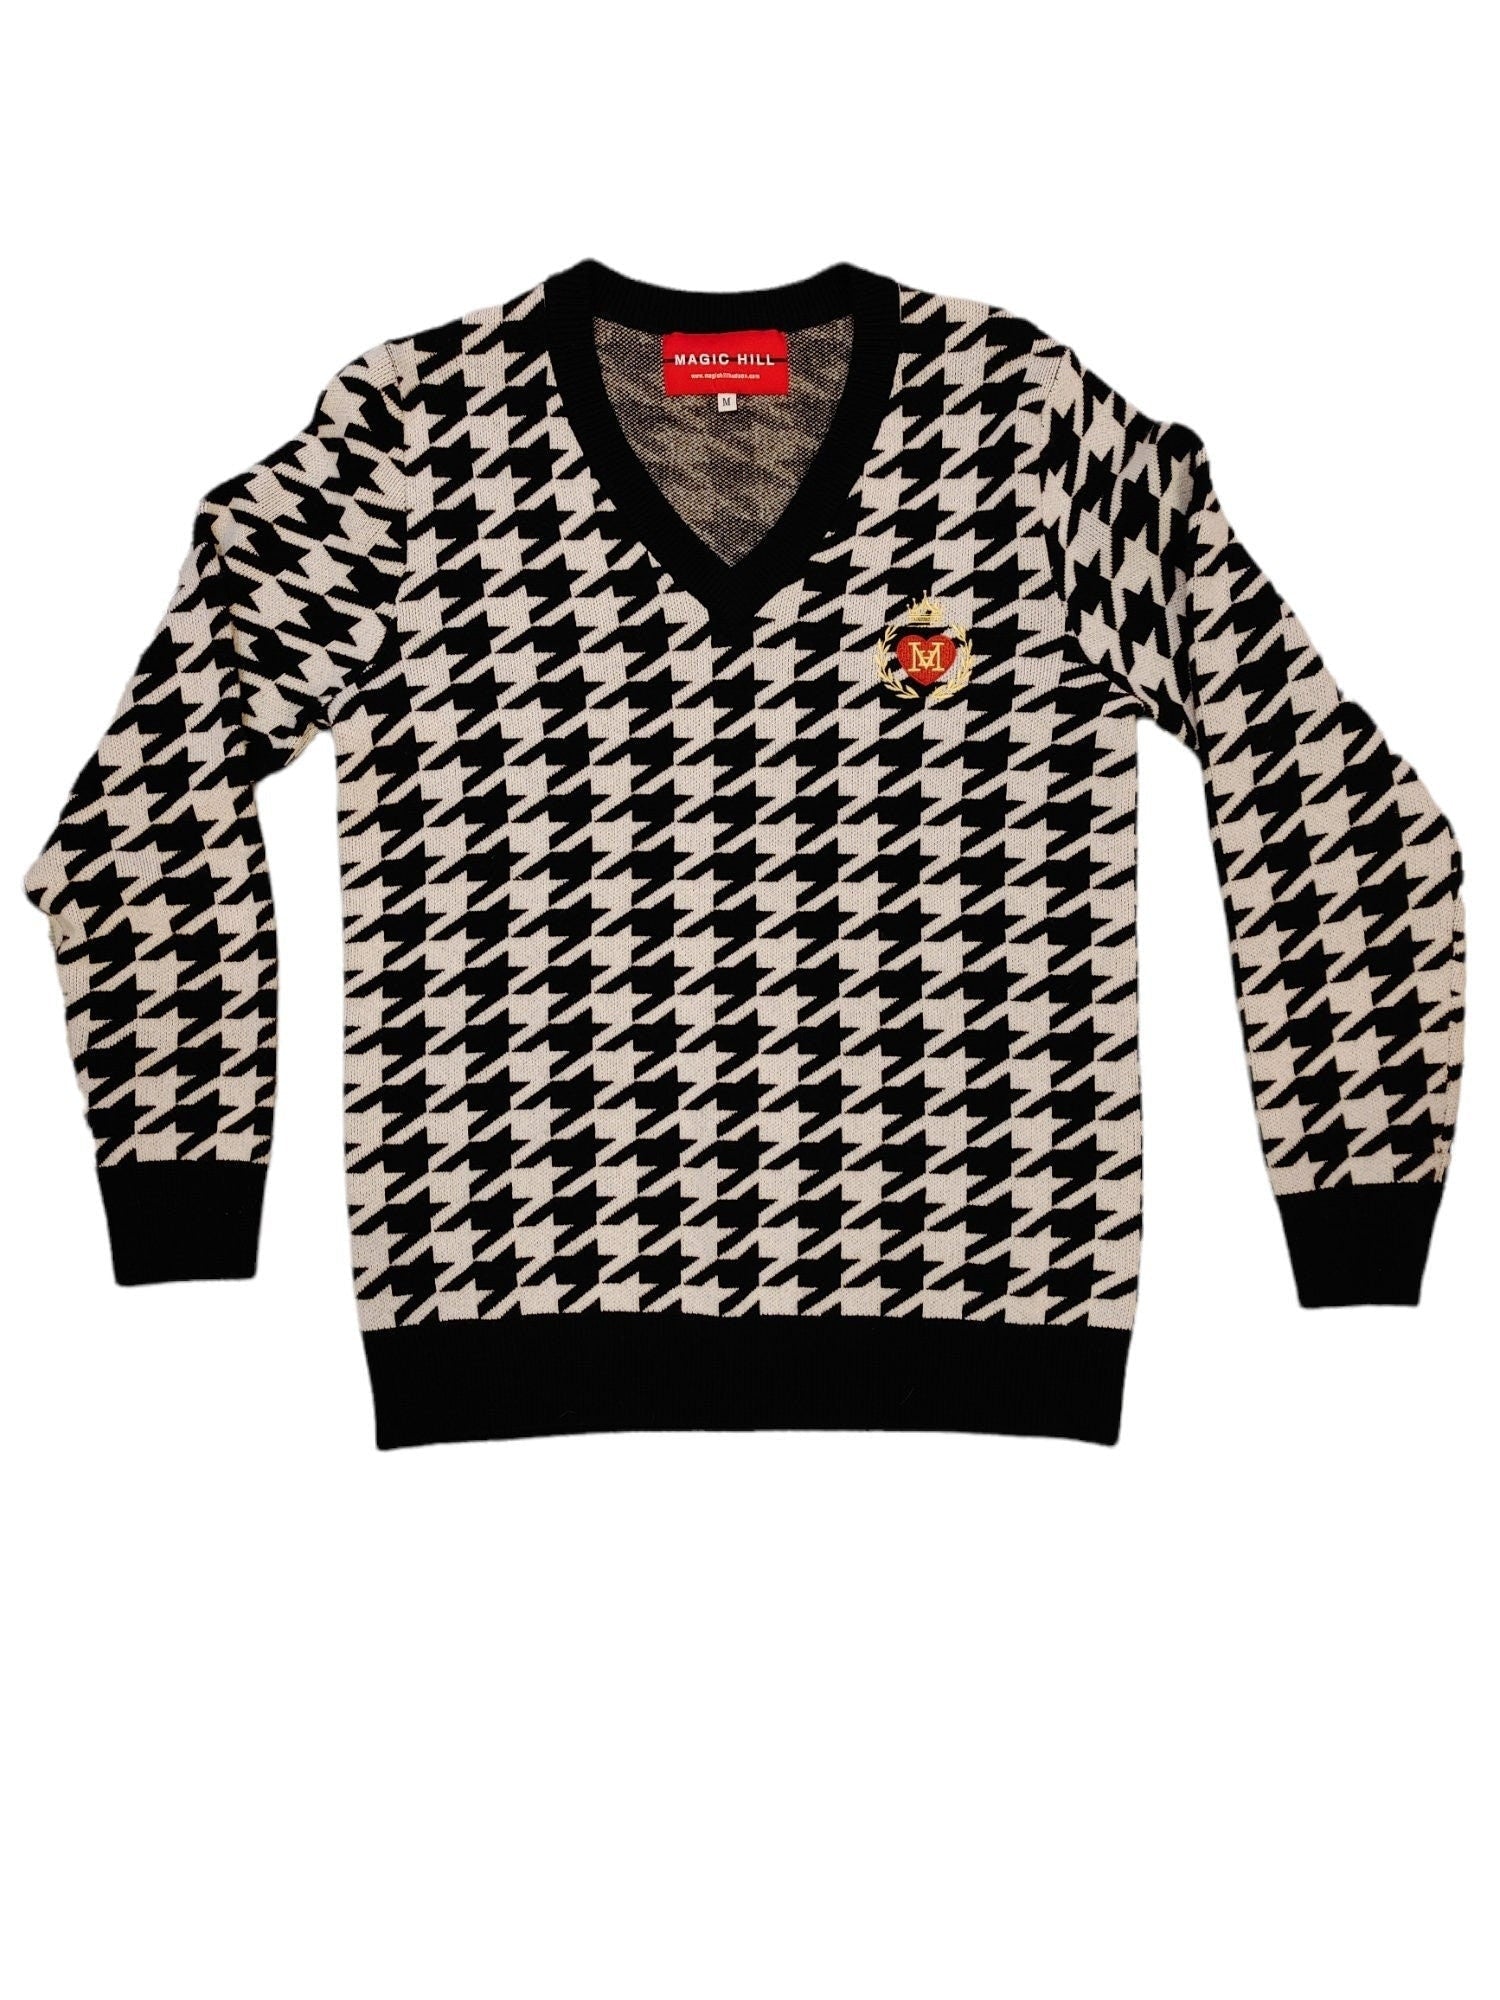 100% Cotton Houndstooth V-Neck Custom Sweater.